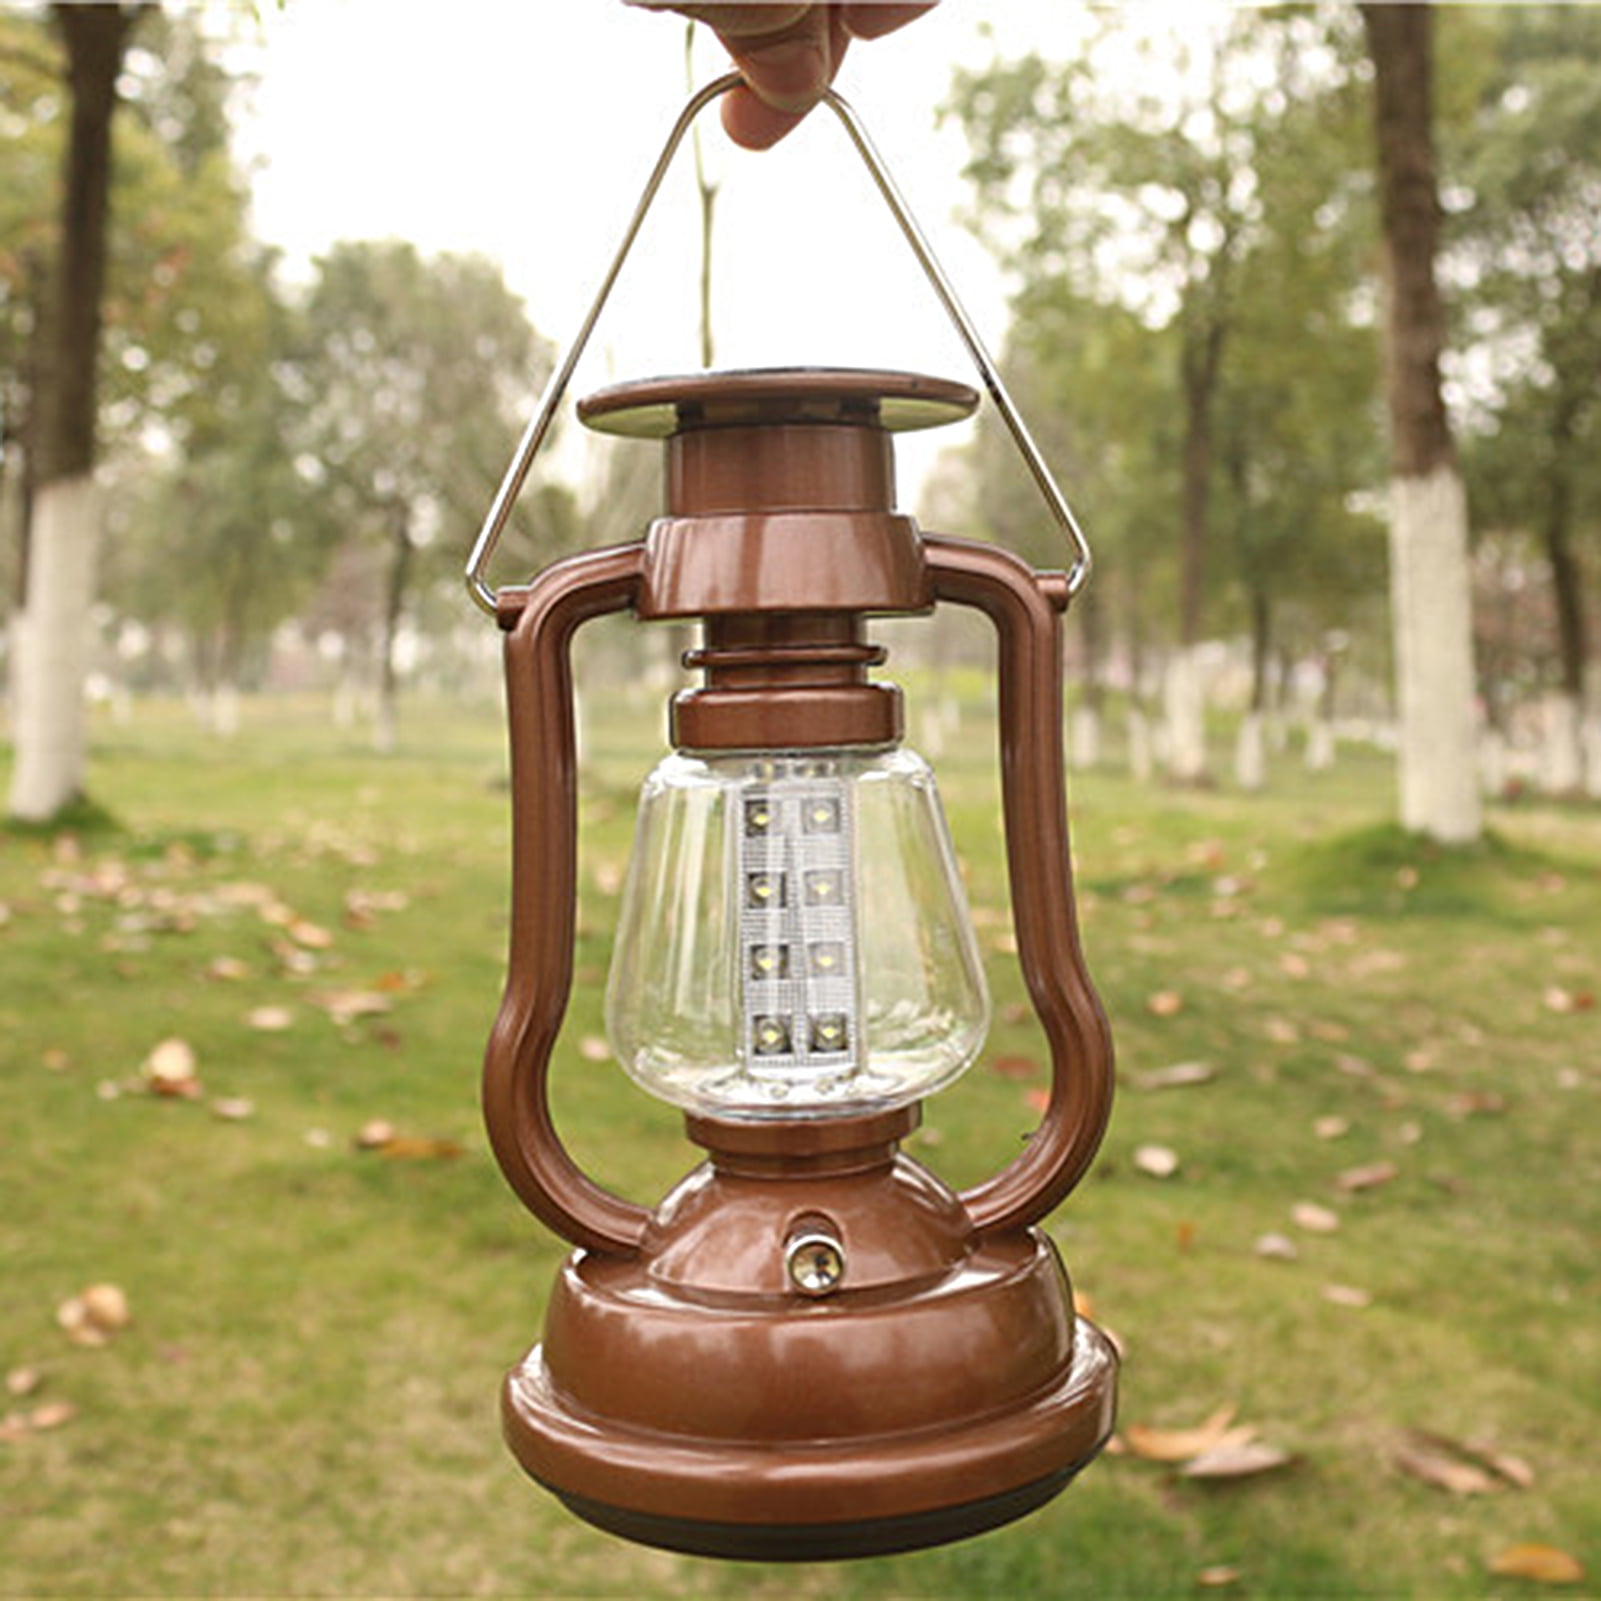 Brookstone Camping or Emergency Lantern - Never Used